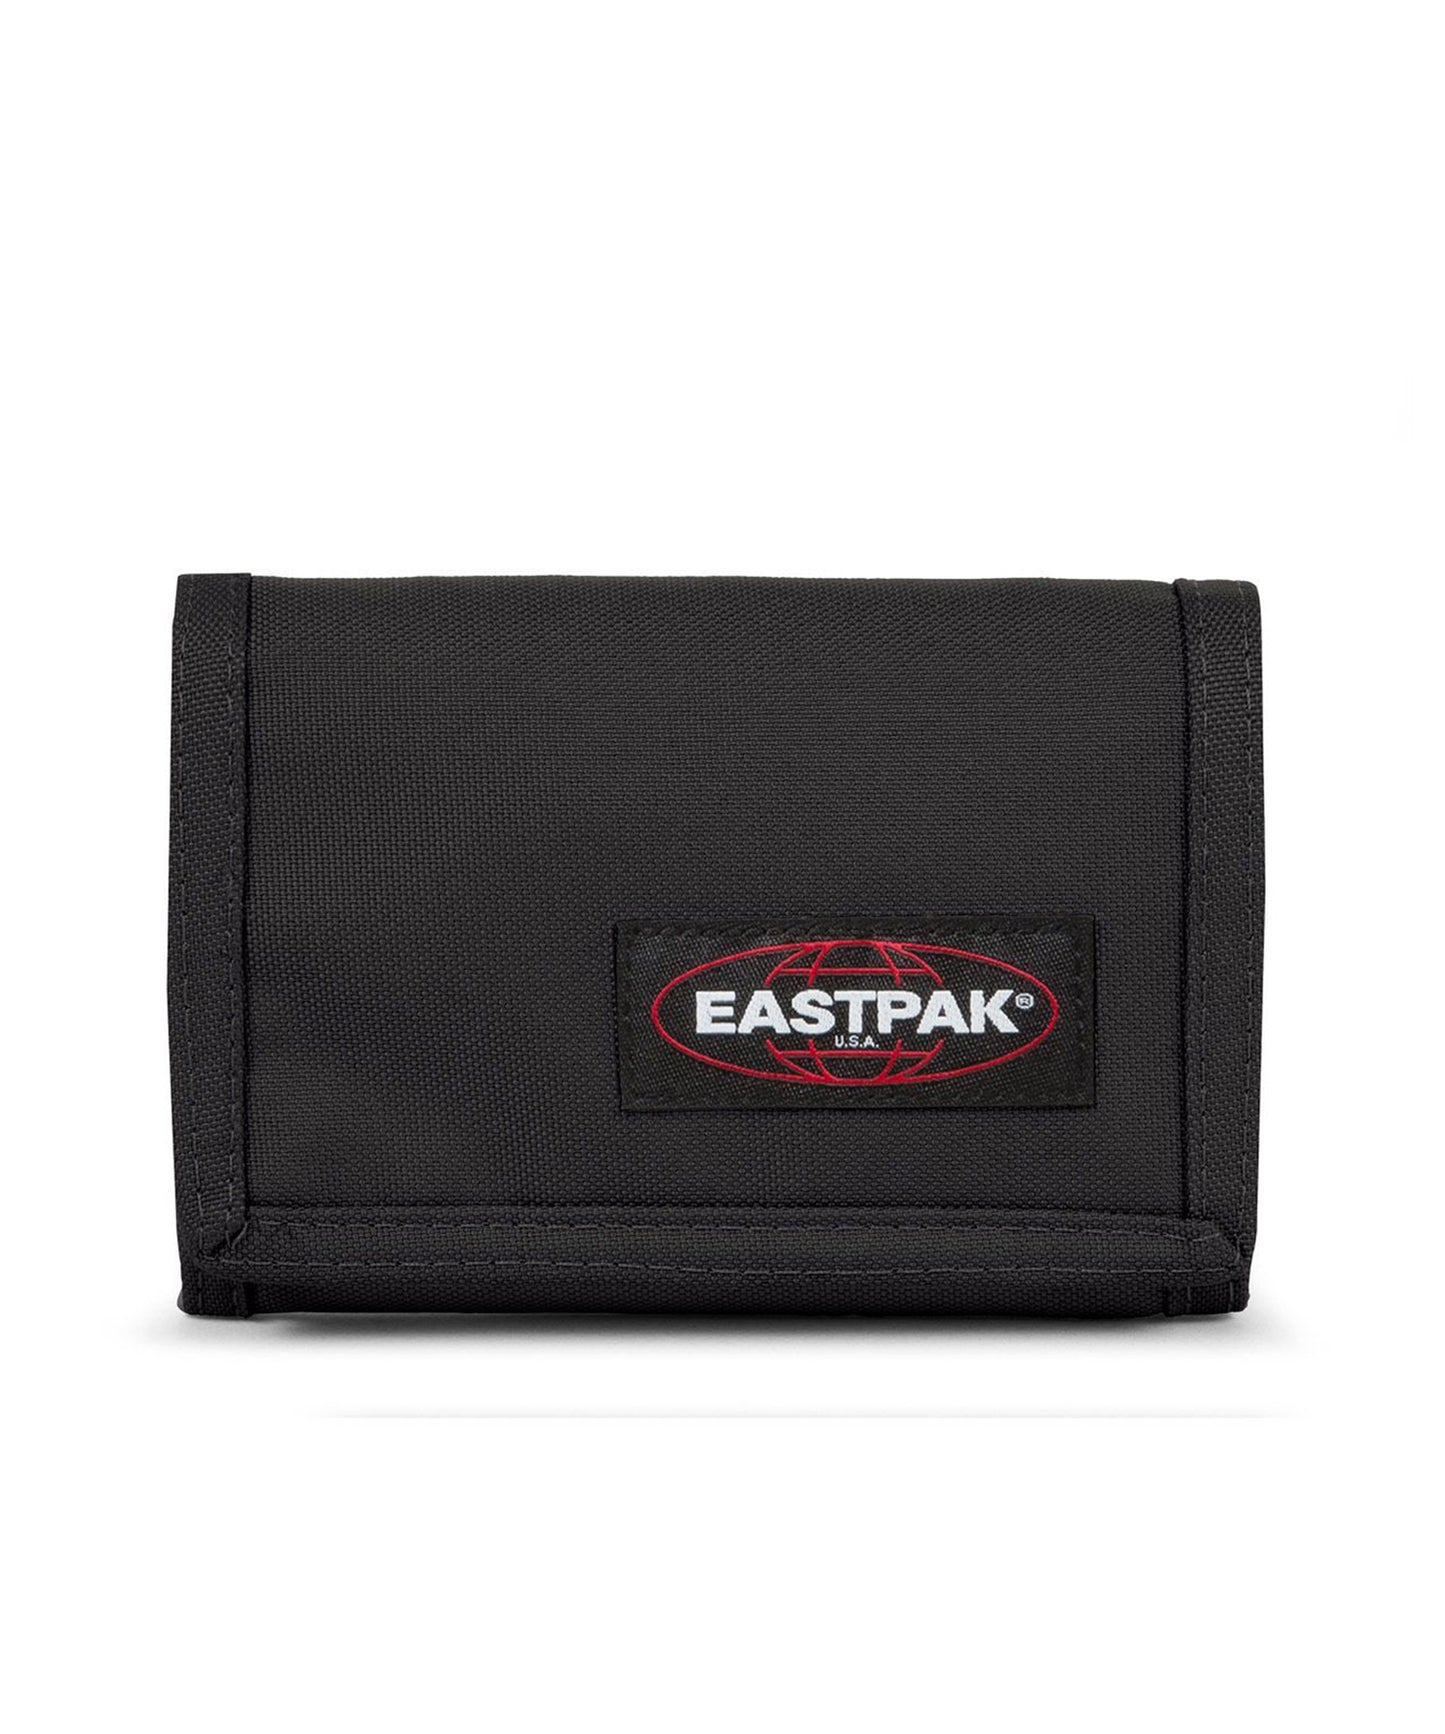 eastpak cartera de loneta color negro con logo eastpak en la parte frontal.